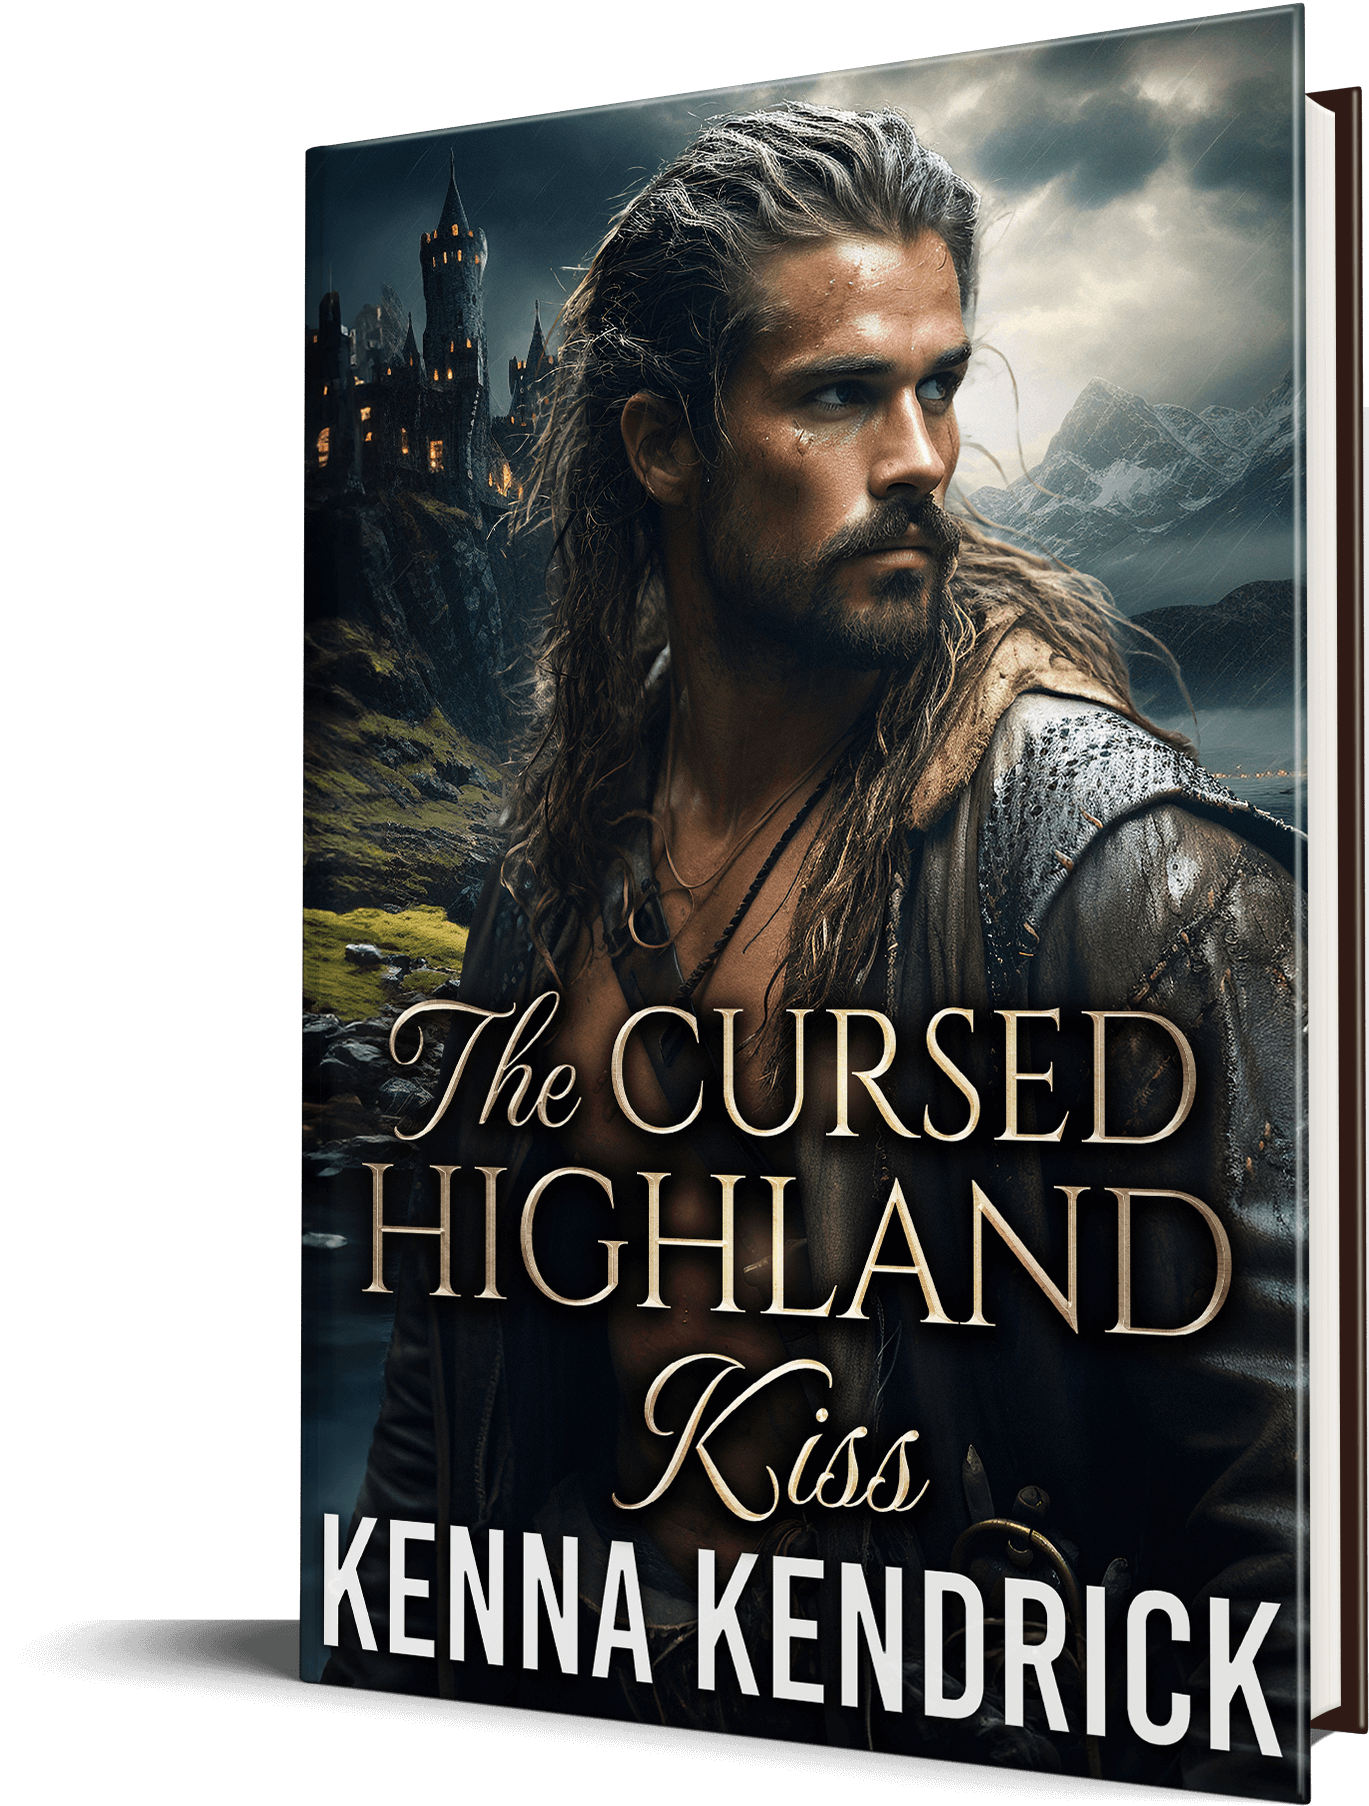 Kenna Kendrick - The Cursed Highland Kiss